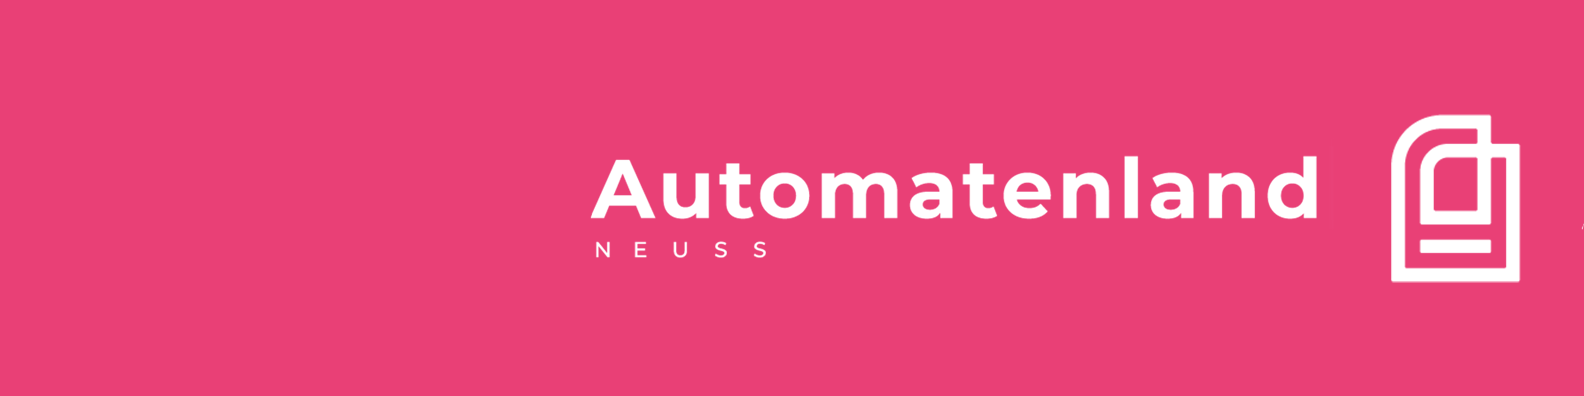 Automatenland / startup from Neuss / Background